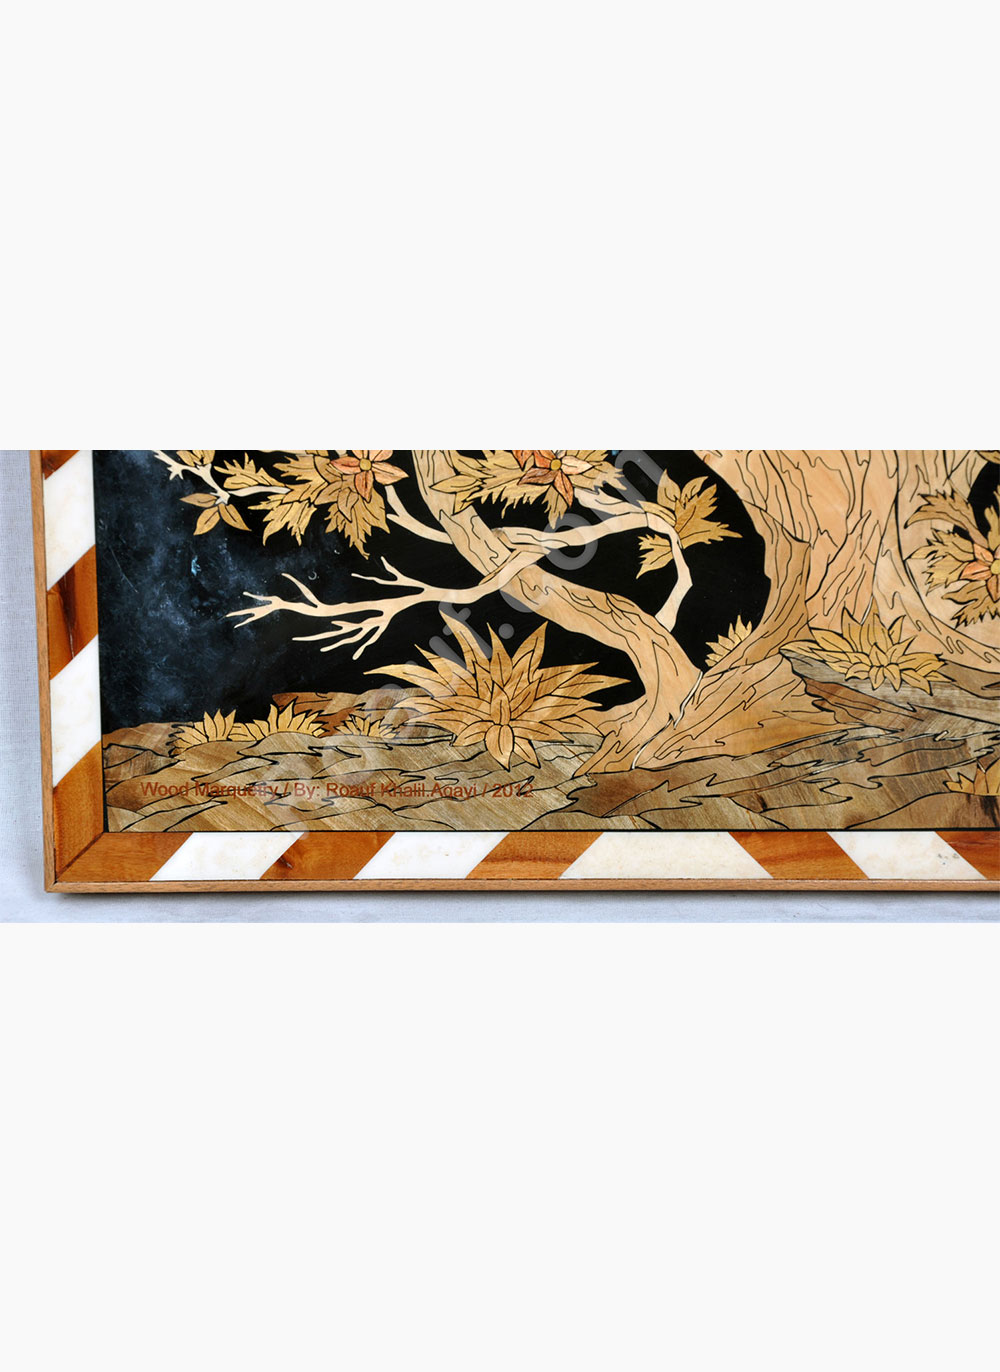 Wood Inlay, Wood Marquetry Panel of Phoenix